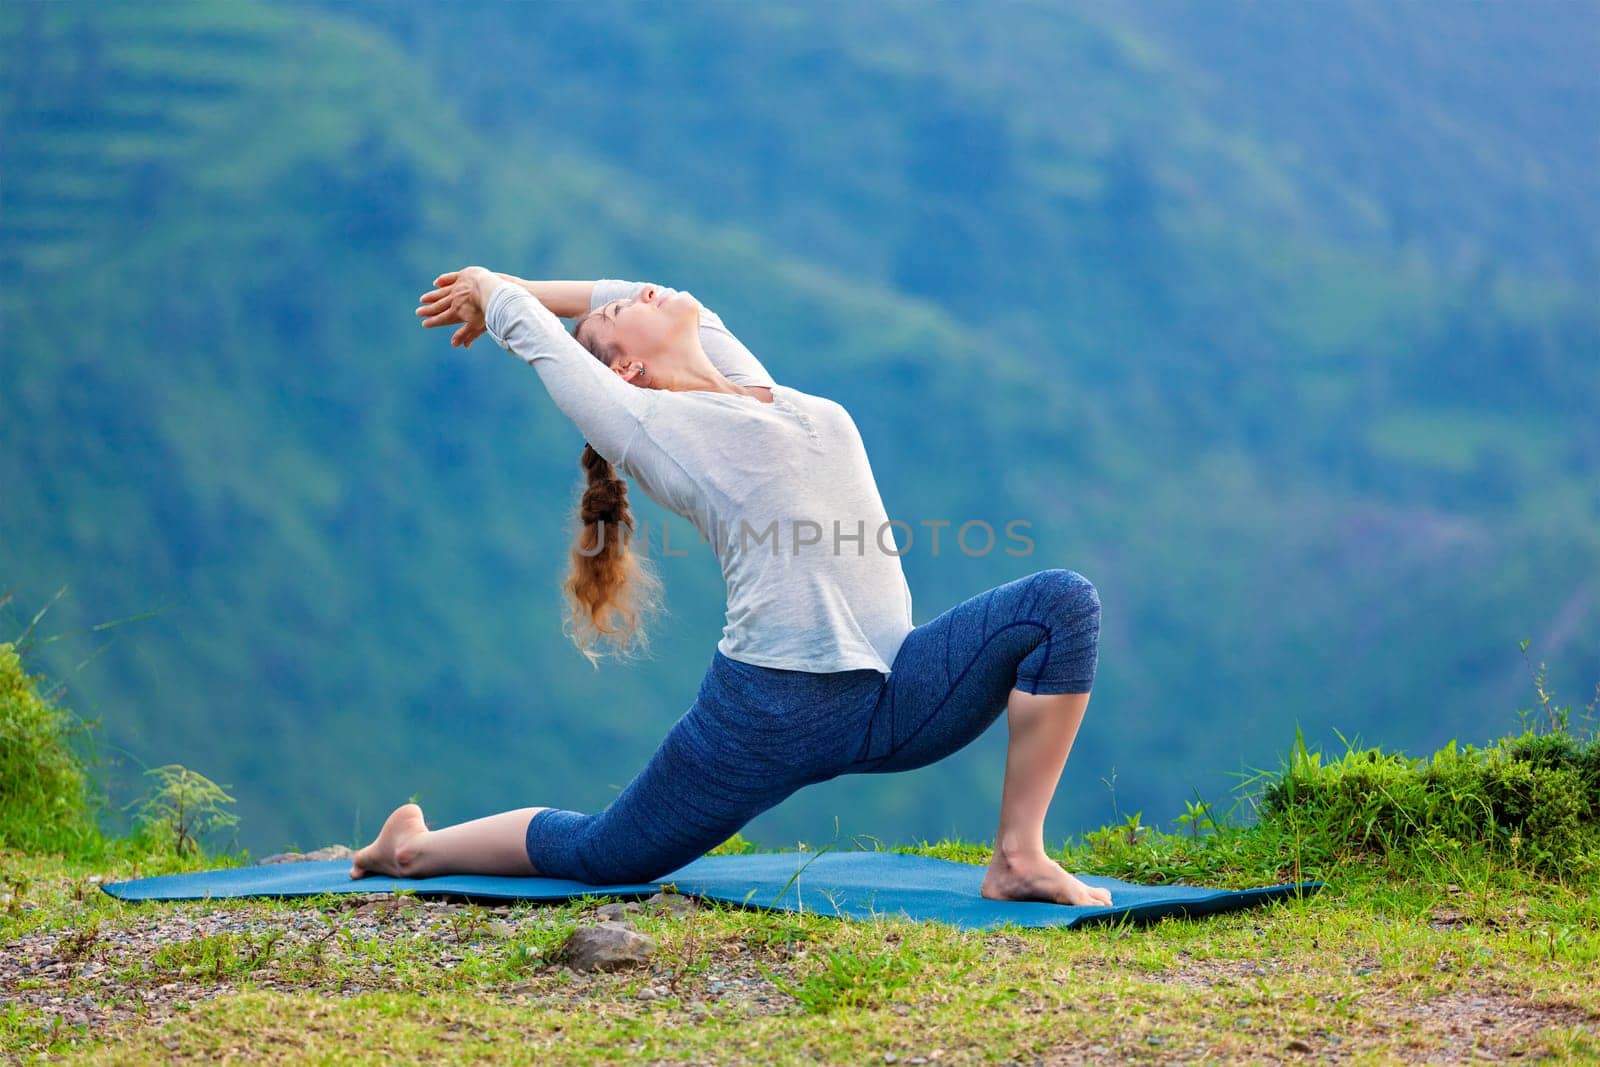 Sporty fit woman practices yoga asana Anjaneyasana in mountains by dimol